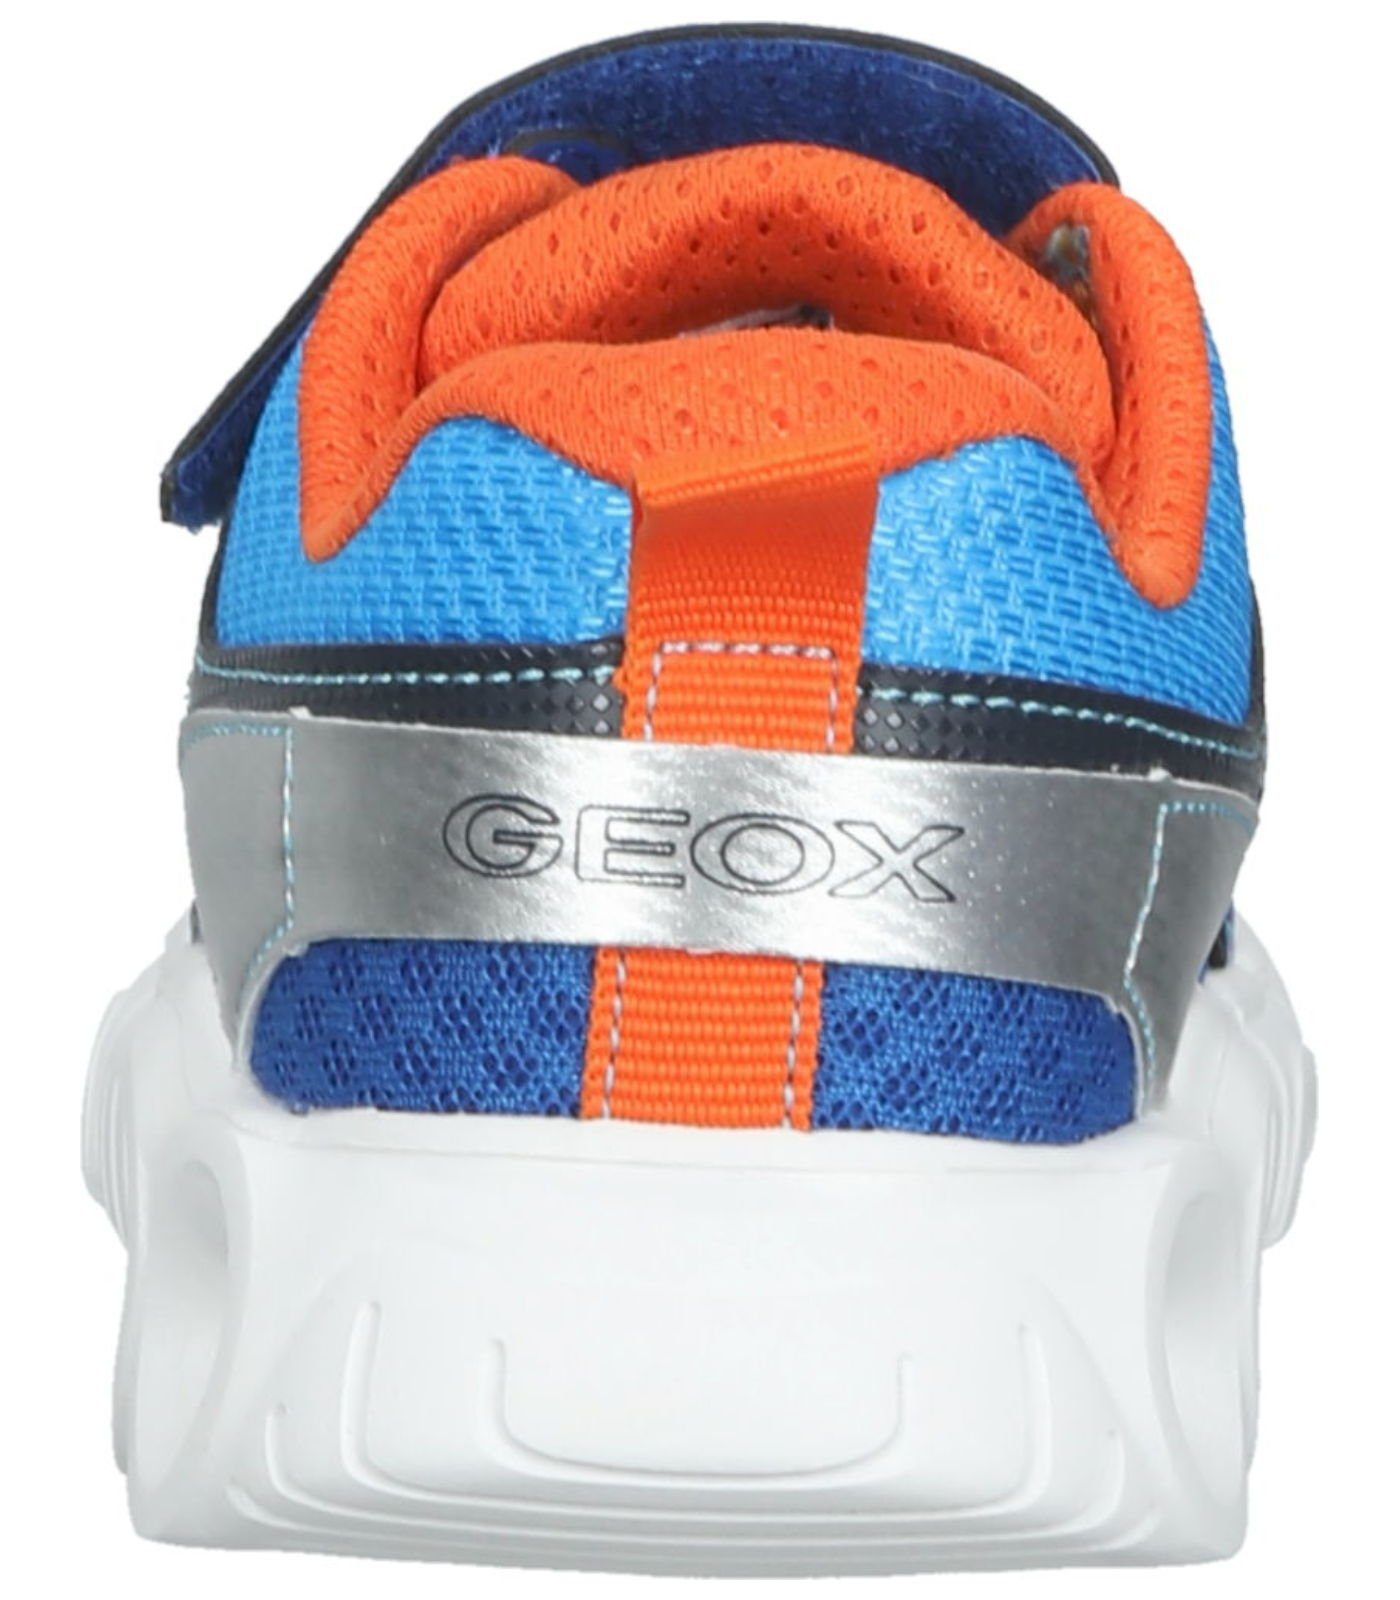 Sneaker Geox Sneaker Lederimitat/Textil (ROYAL/ORANGE) Blau